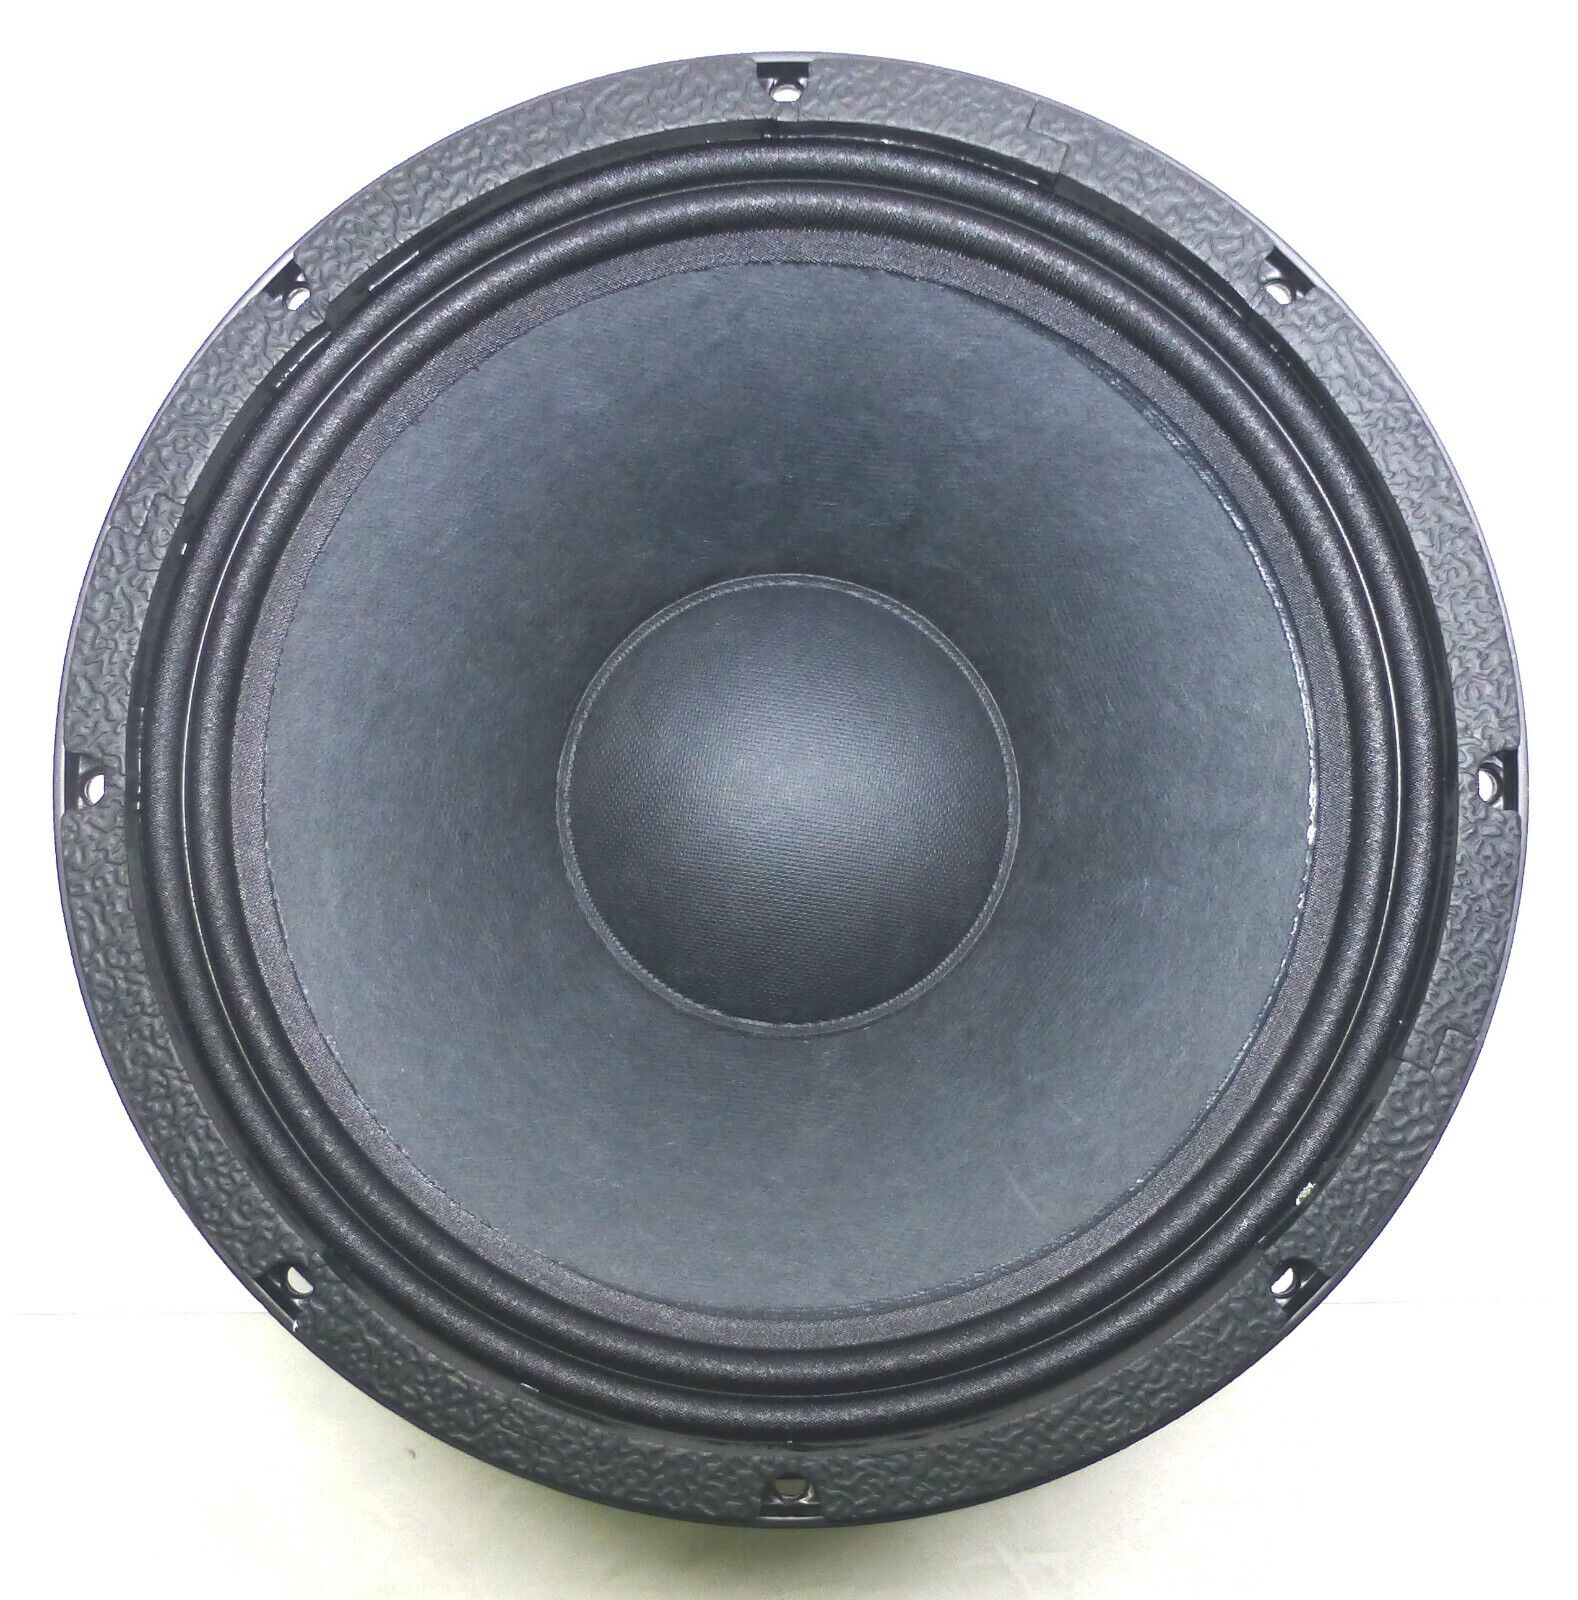 LASE 12LM-1000 12" Bass/Mid-Bass Speaker